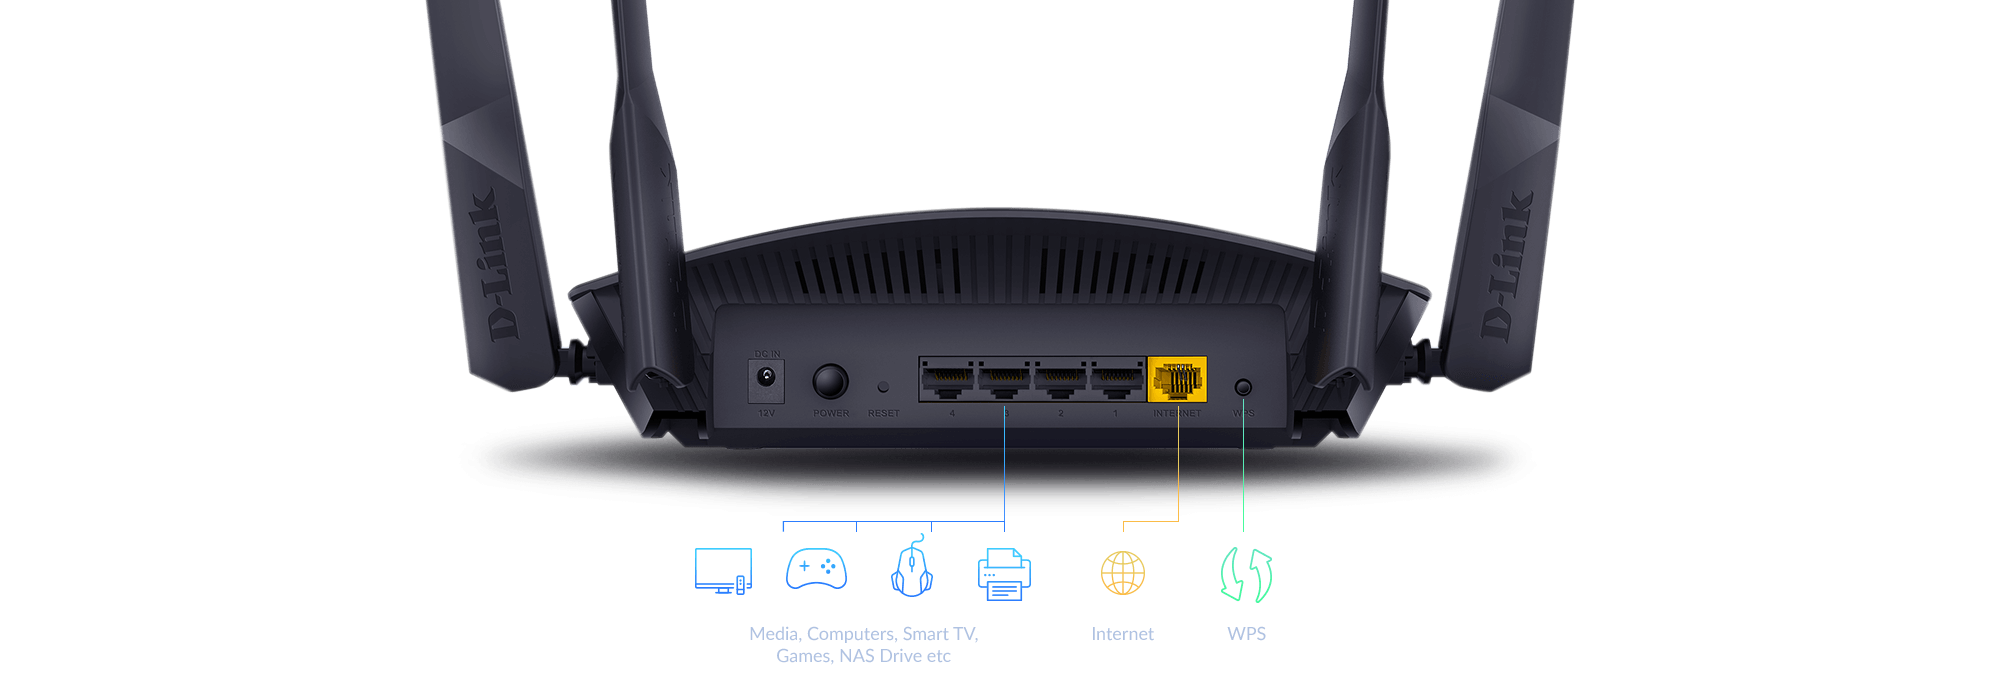 Diagram showing DIR-X1860 AX1800 Wi-Fi 6 Router ports